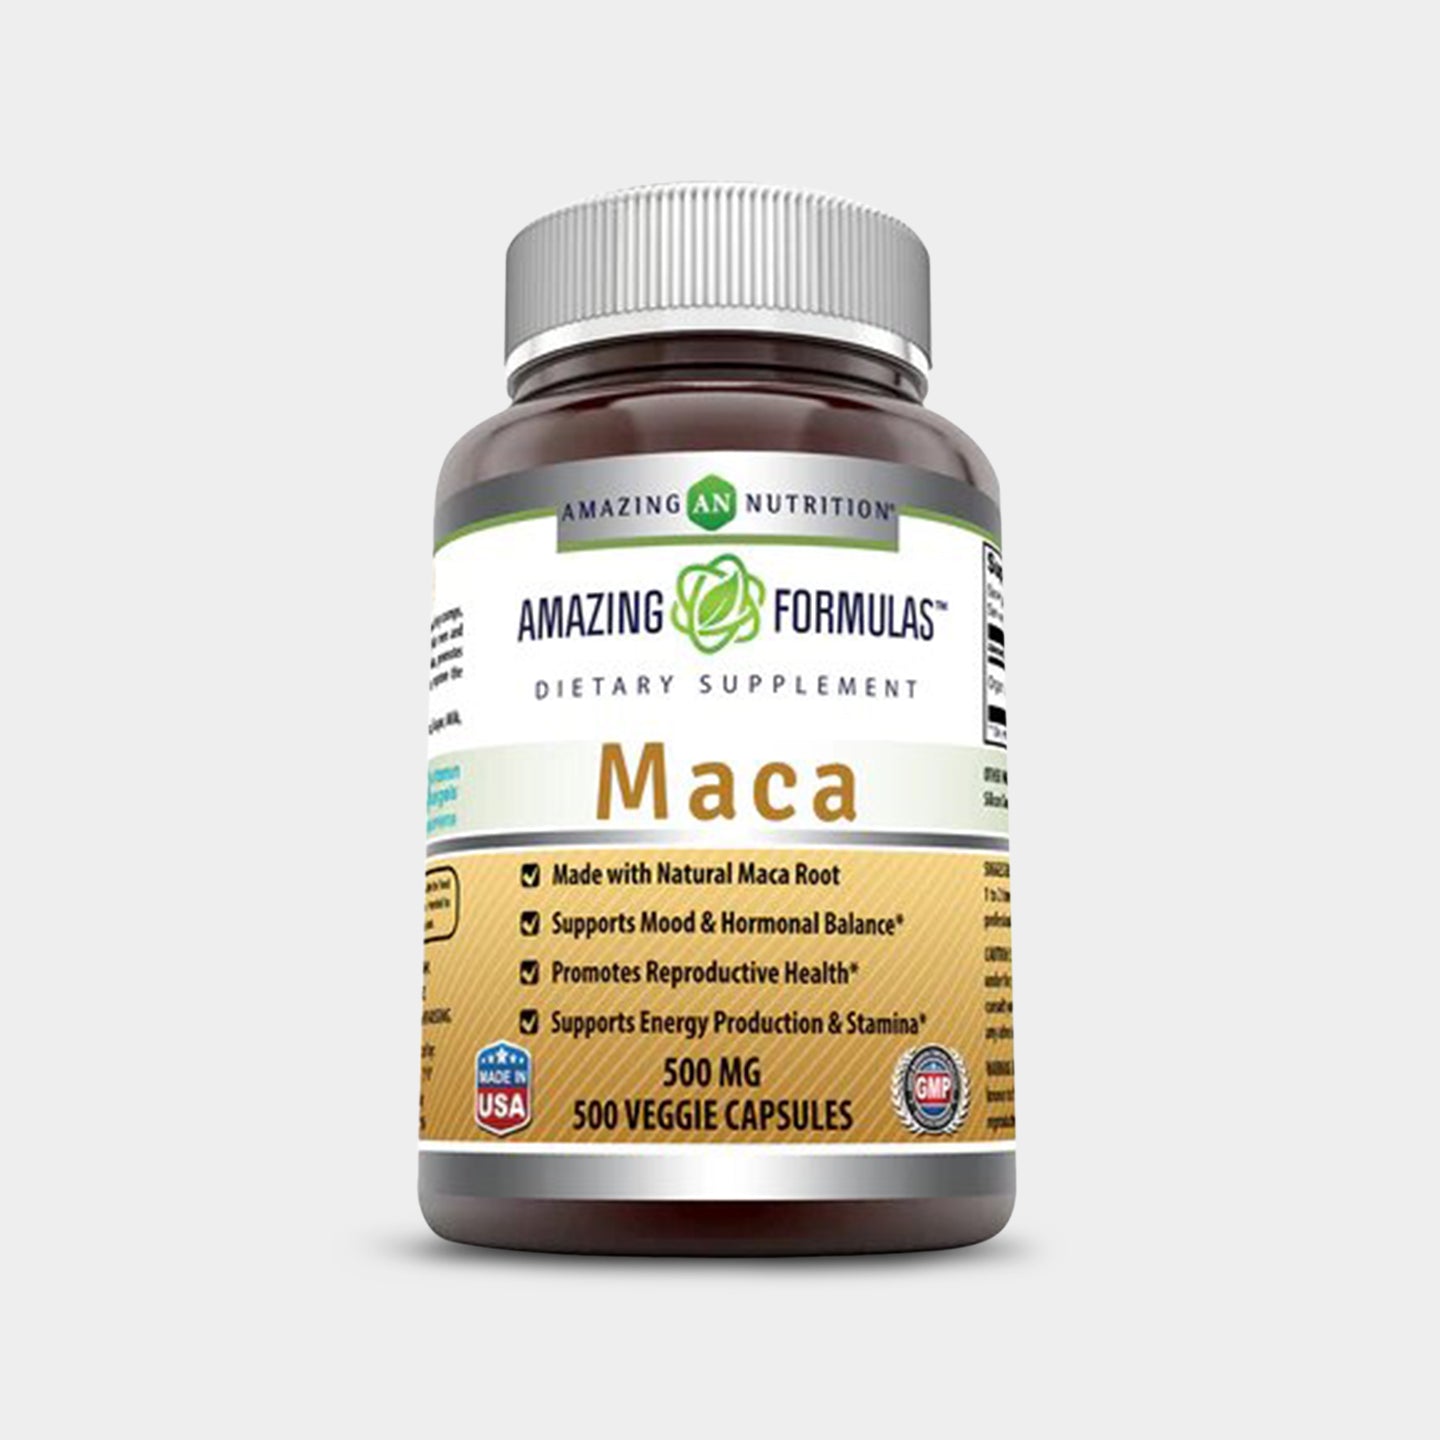 Amazing Nutrition Amazing Formulas Maca 500 Mg, Unflavored, 500 Veggie Capsules A1